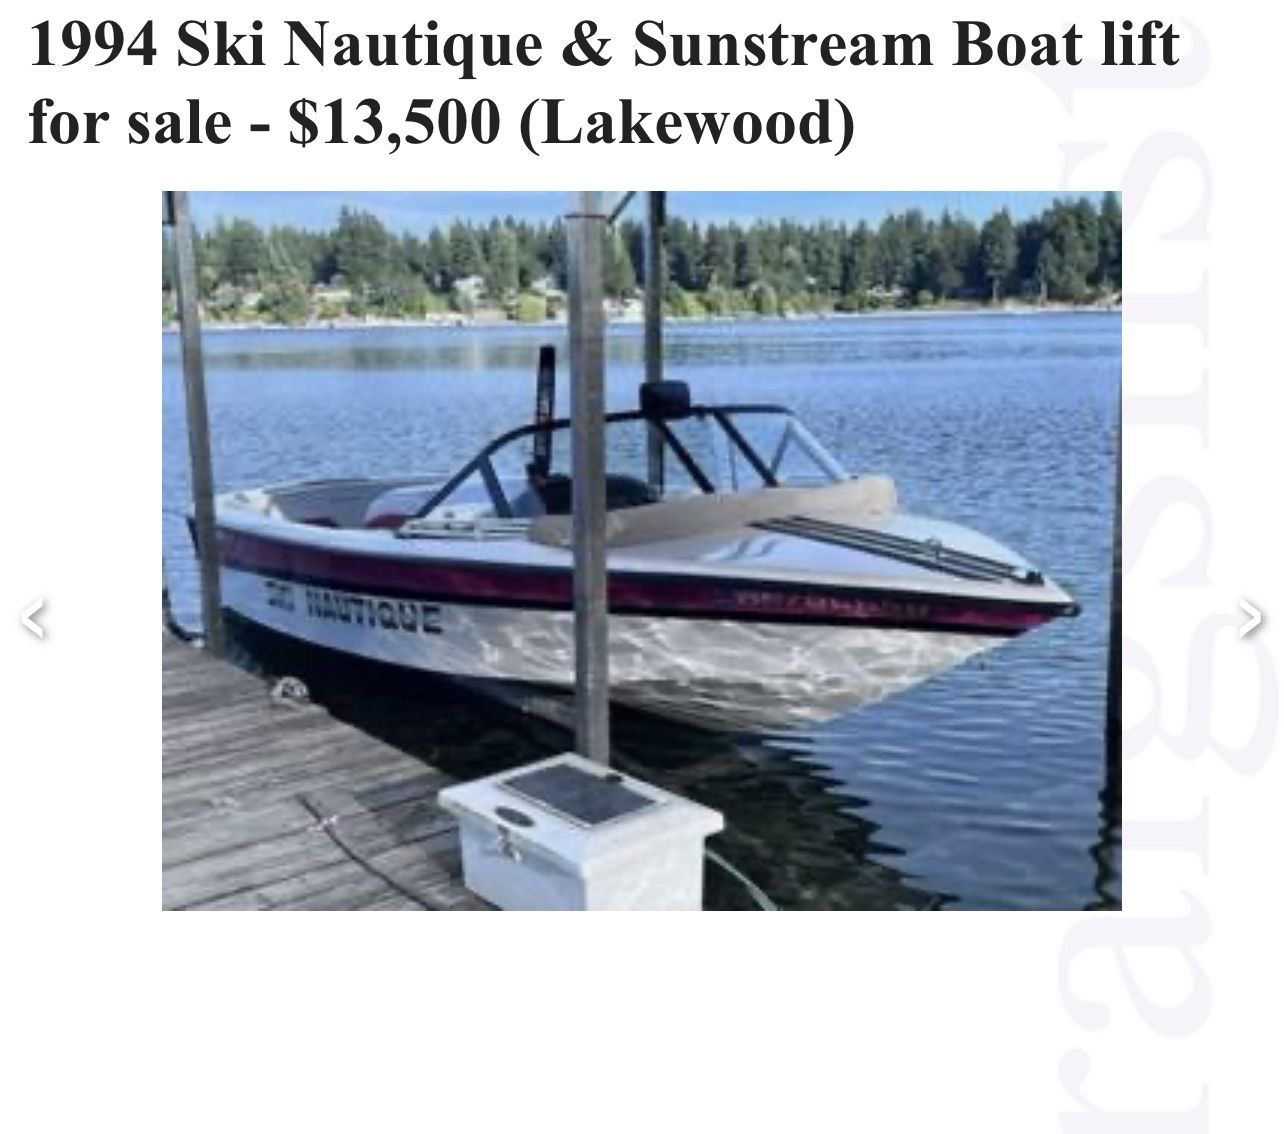 1994 Ski Nautique & Sunstream Boat Lift For Sale 